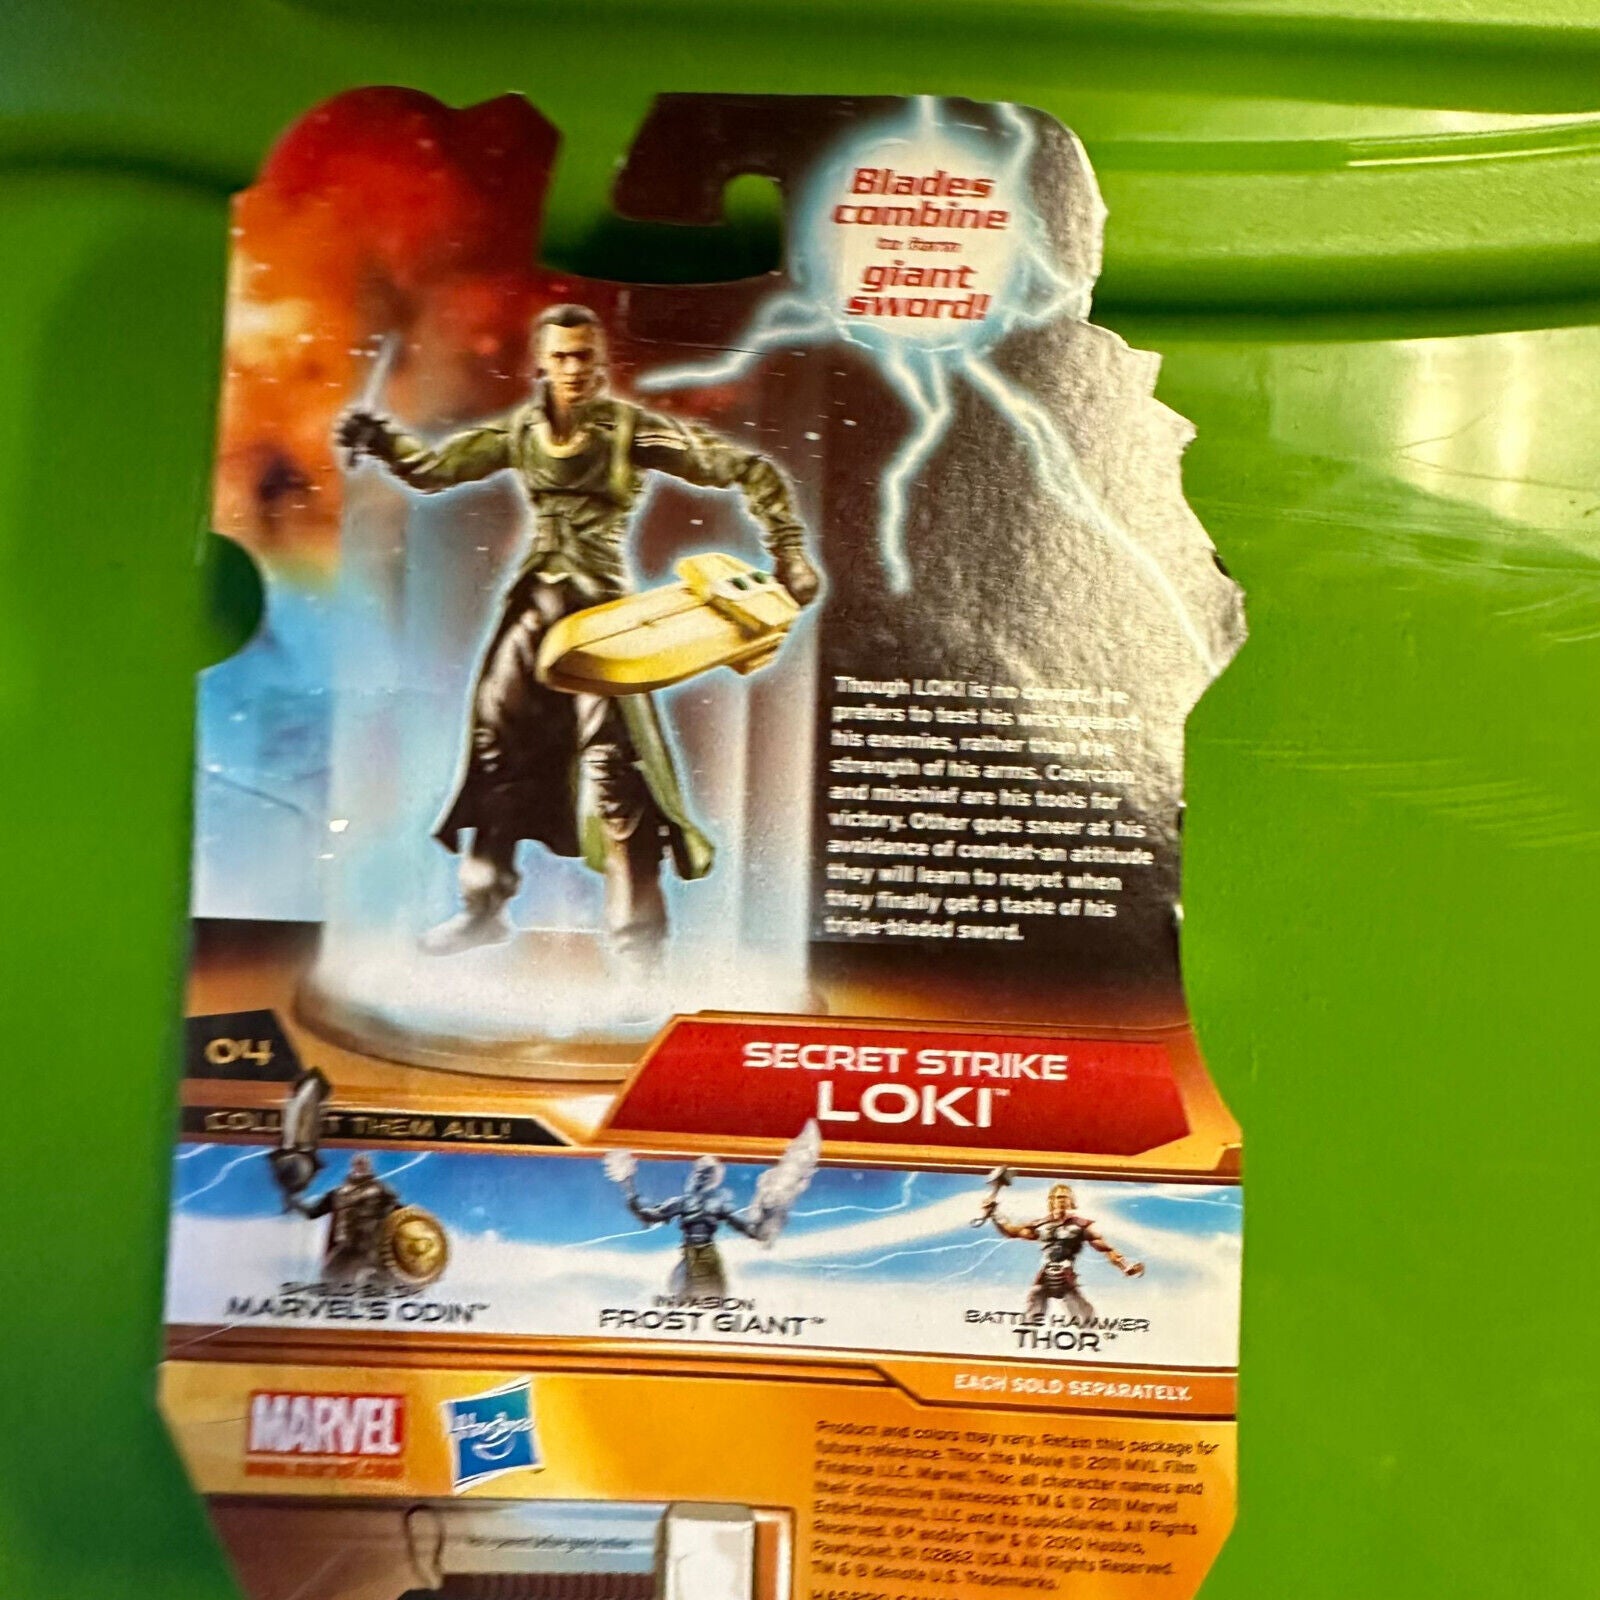 Marvel Thor Mighty Avenger #04 Secret Strike Loki Figure, 3.75" Hasbro